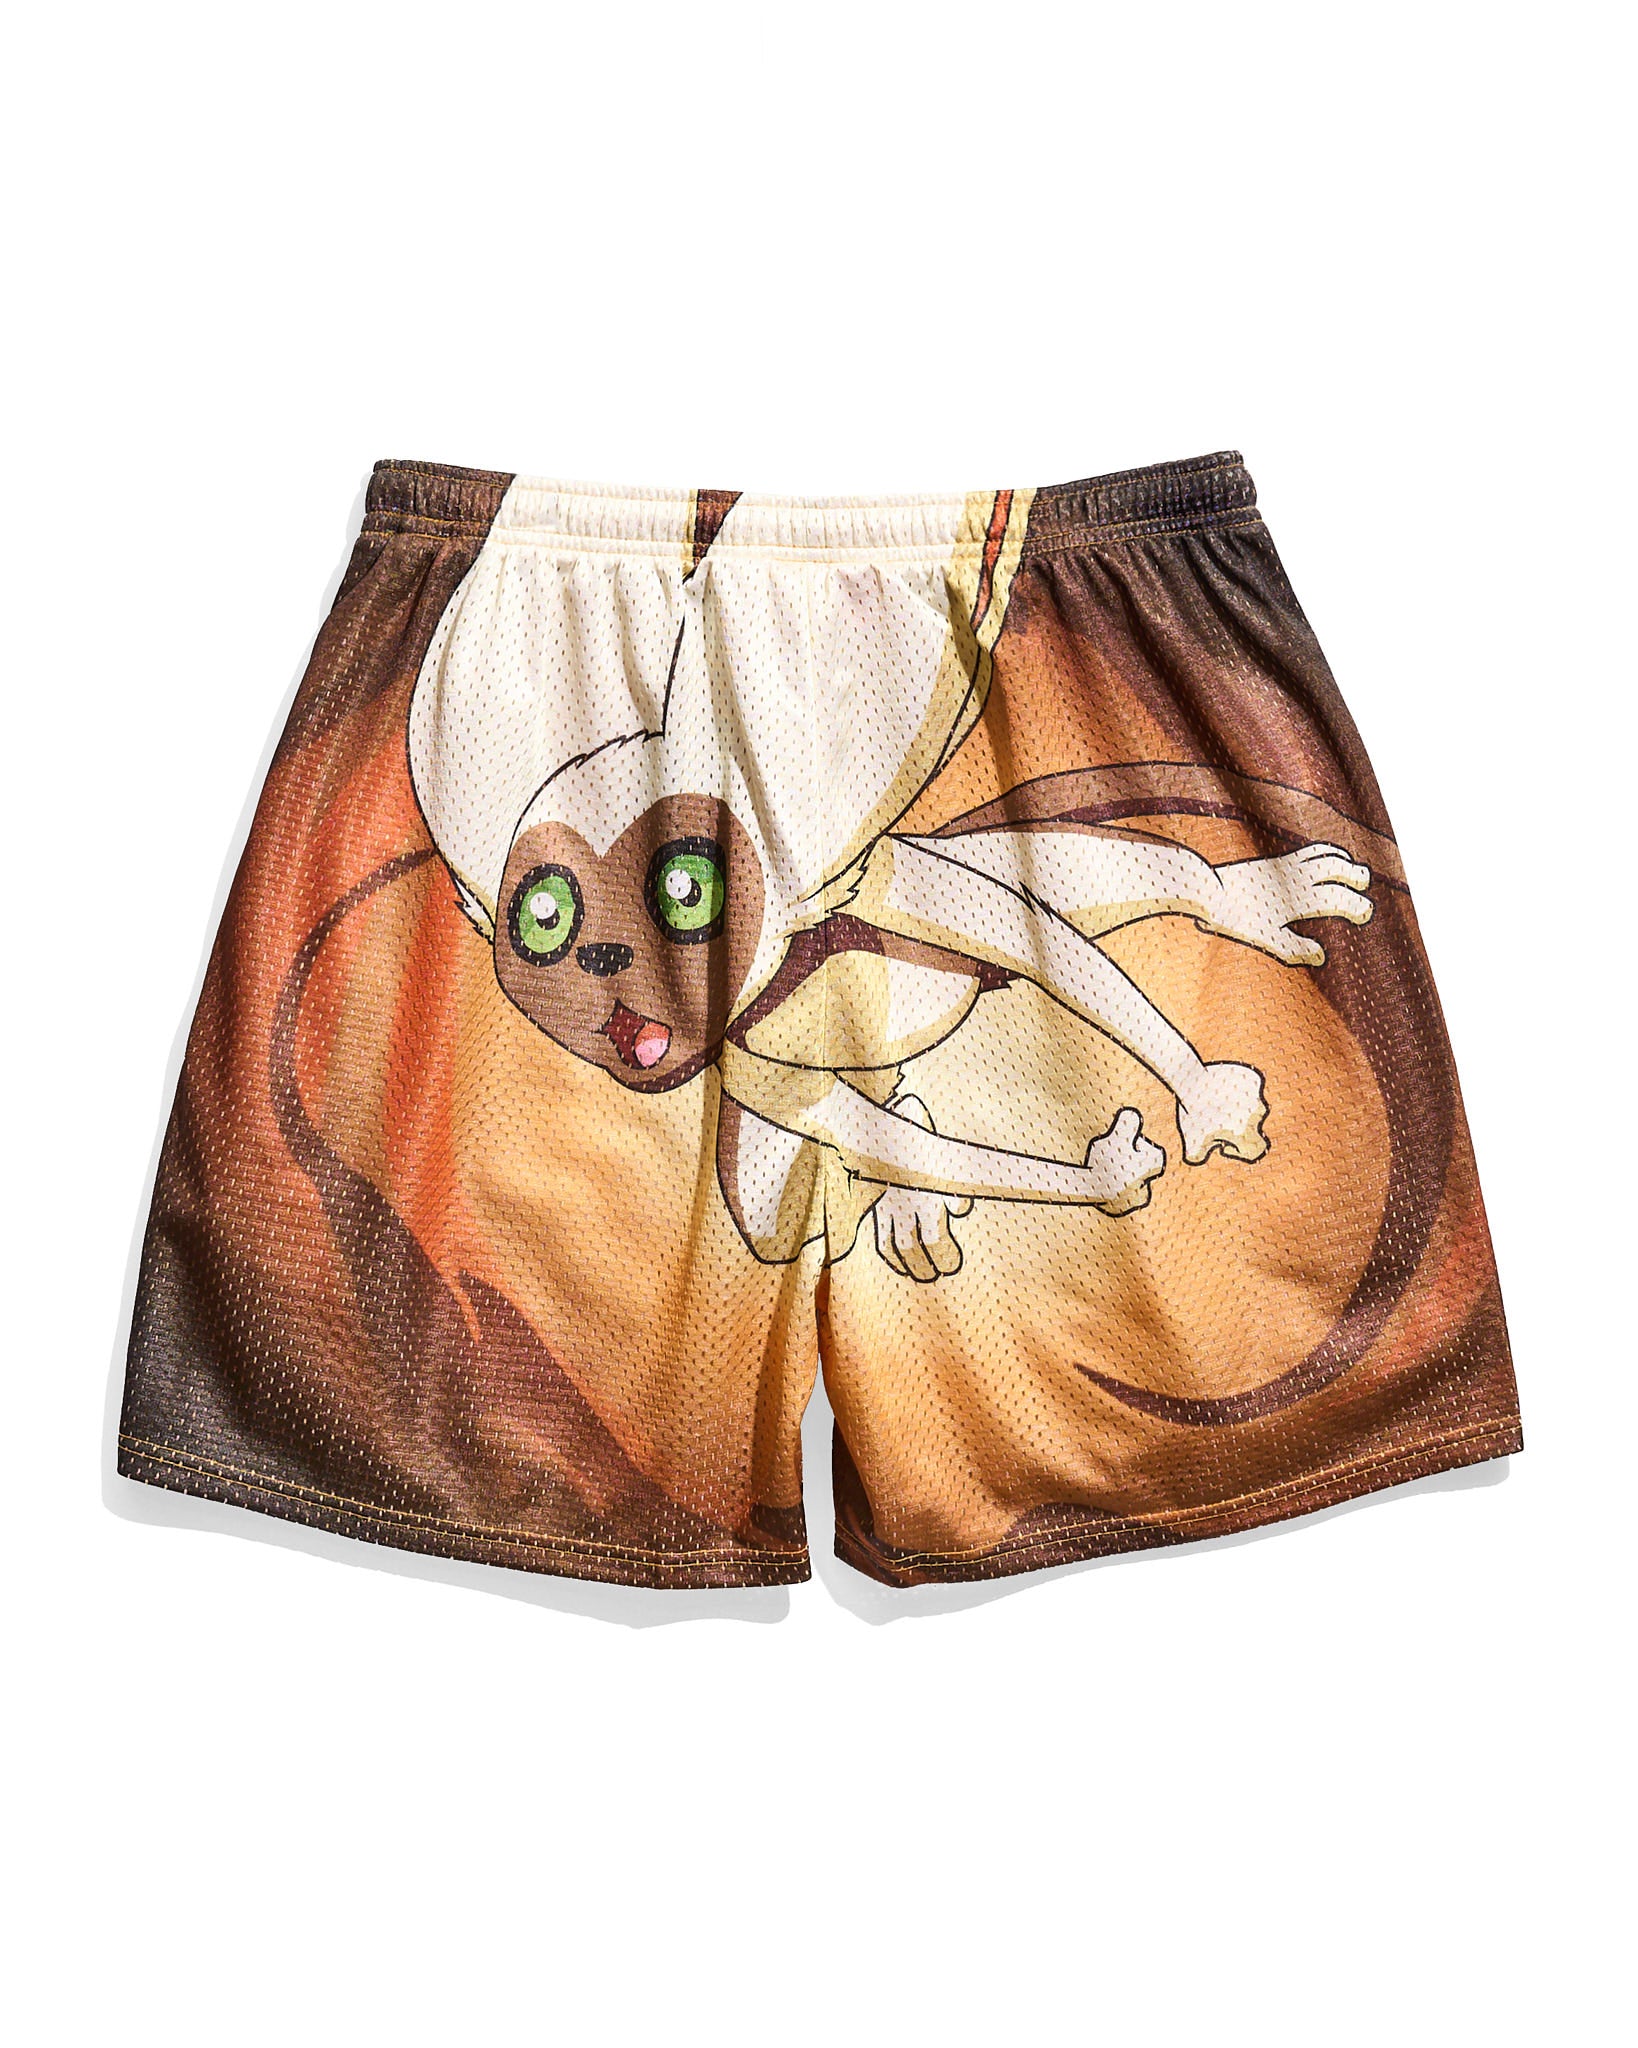 Momo Avatar Retro Shorts